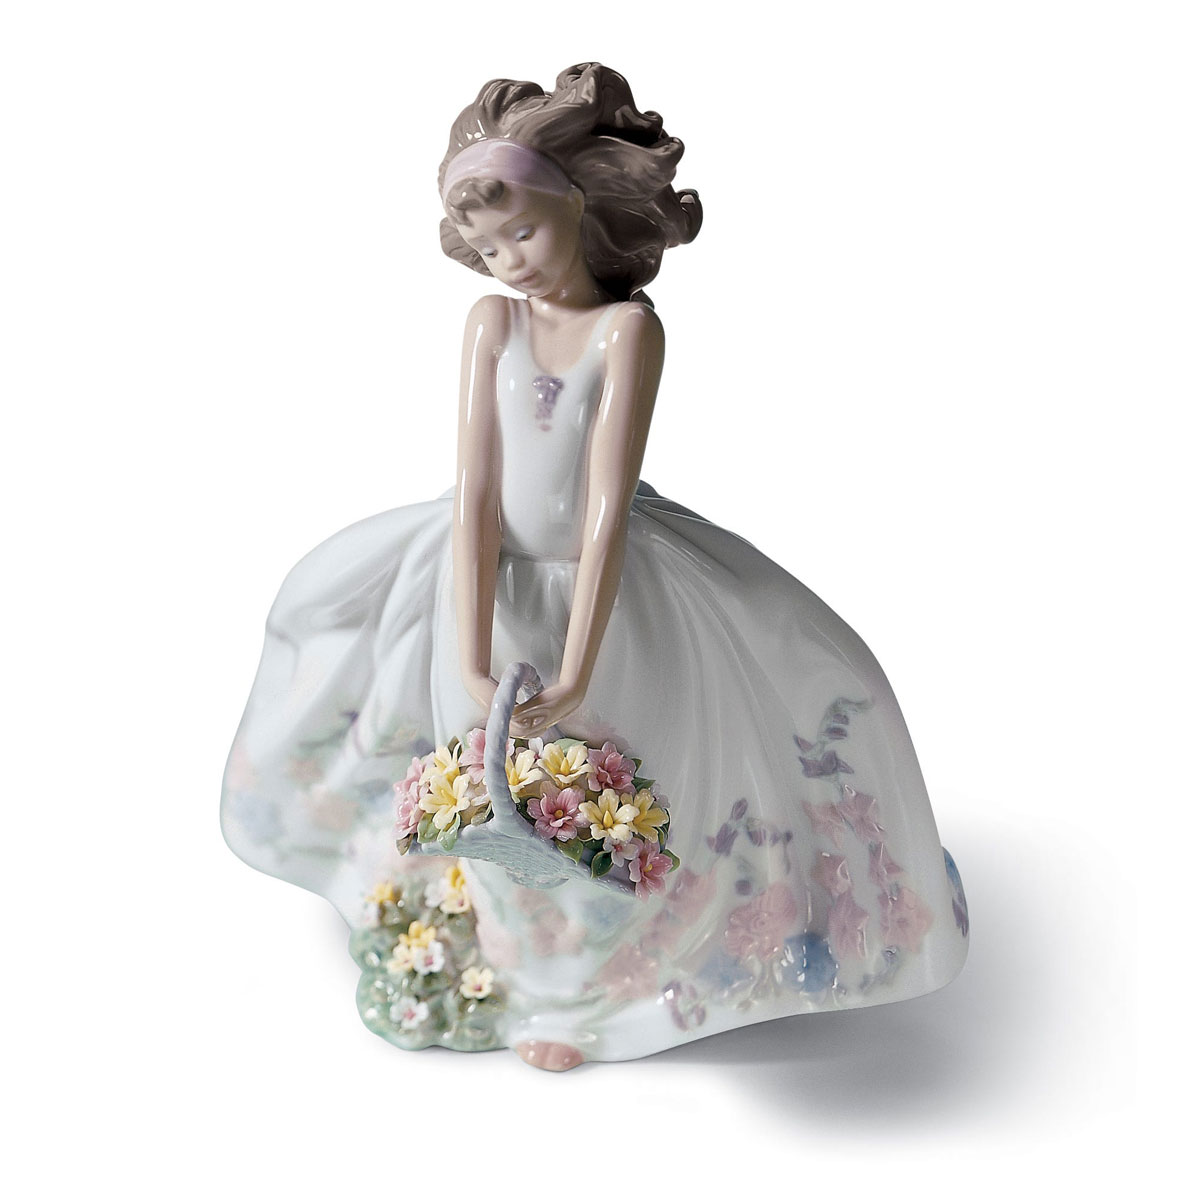 Lladro Classic Sculpture, Wild Flowers Girl Figurine